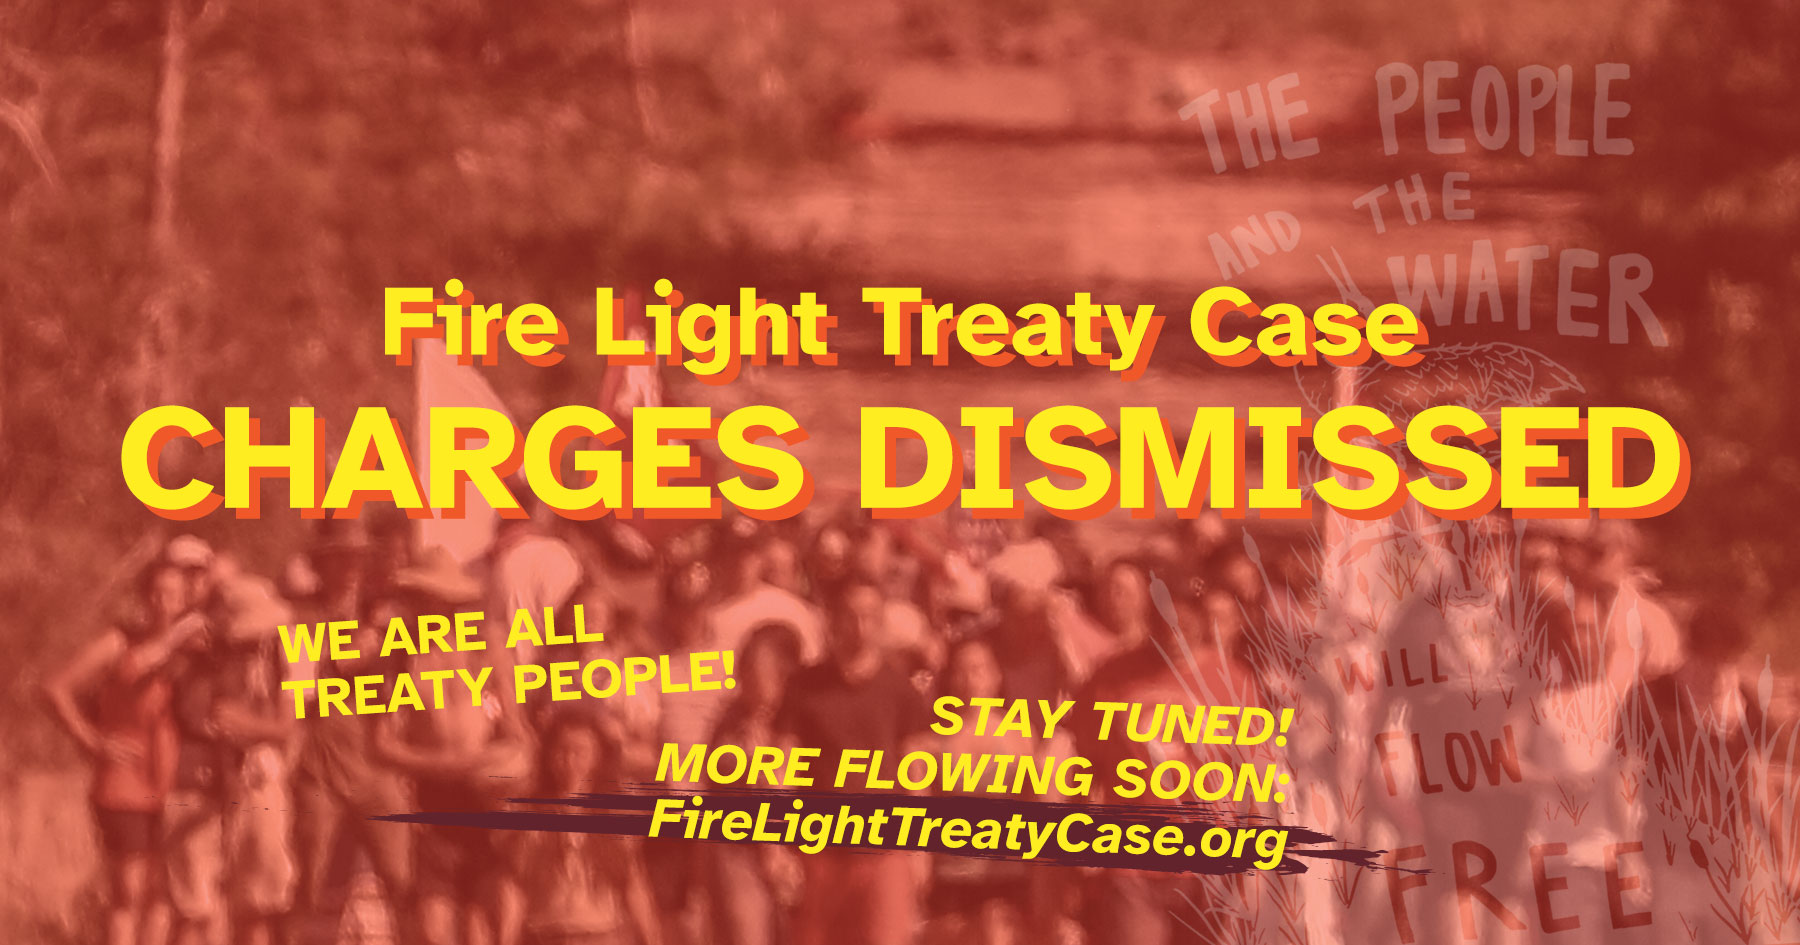 Fire Light Treaty Cases Dismissed